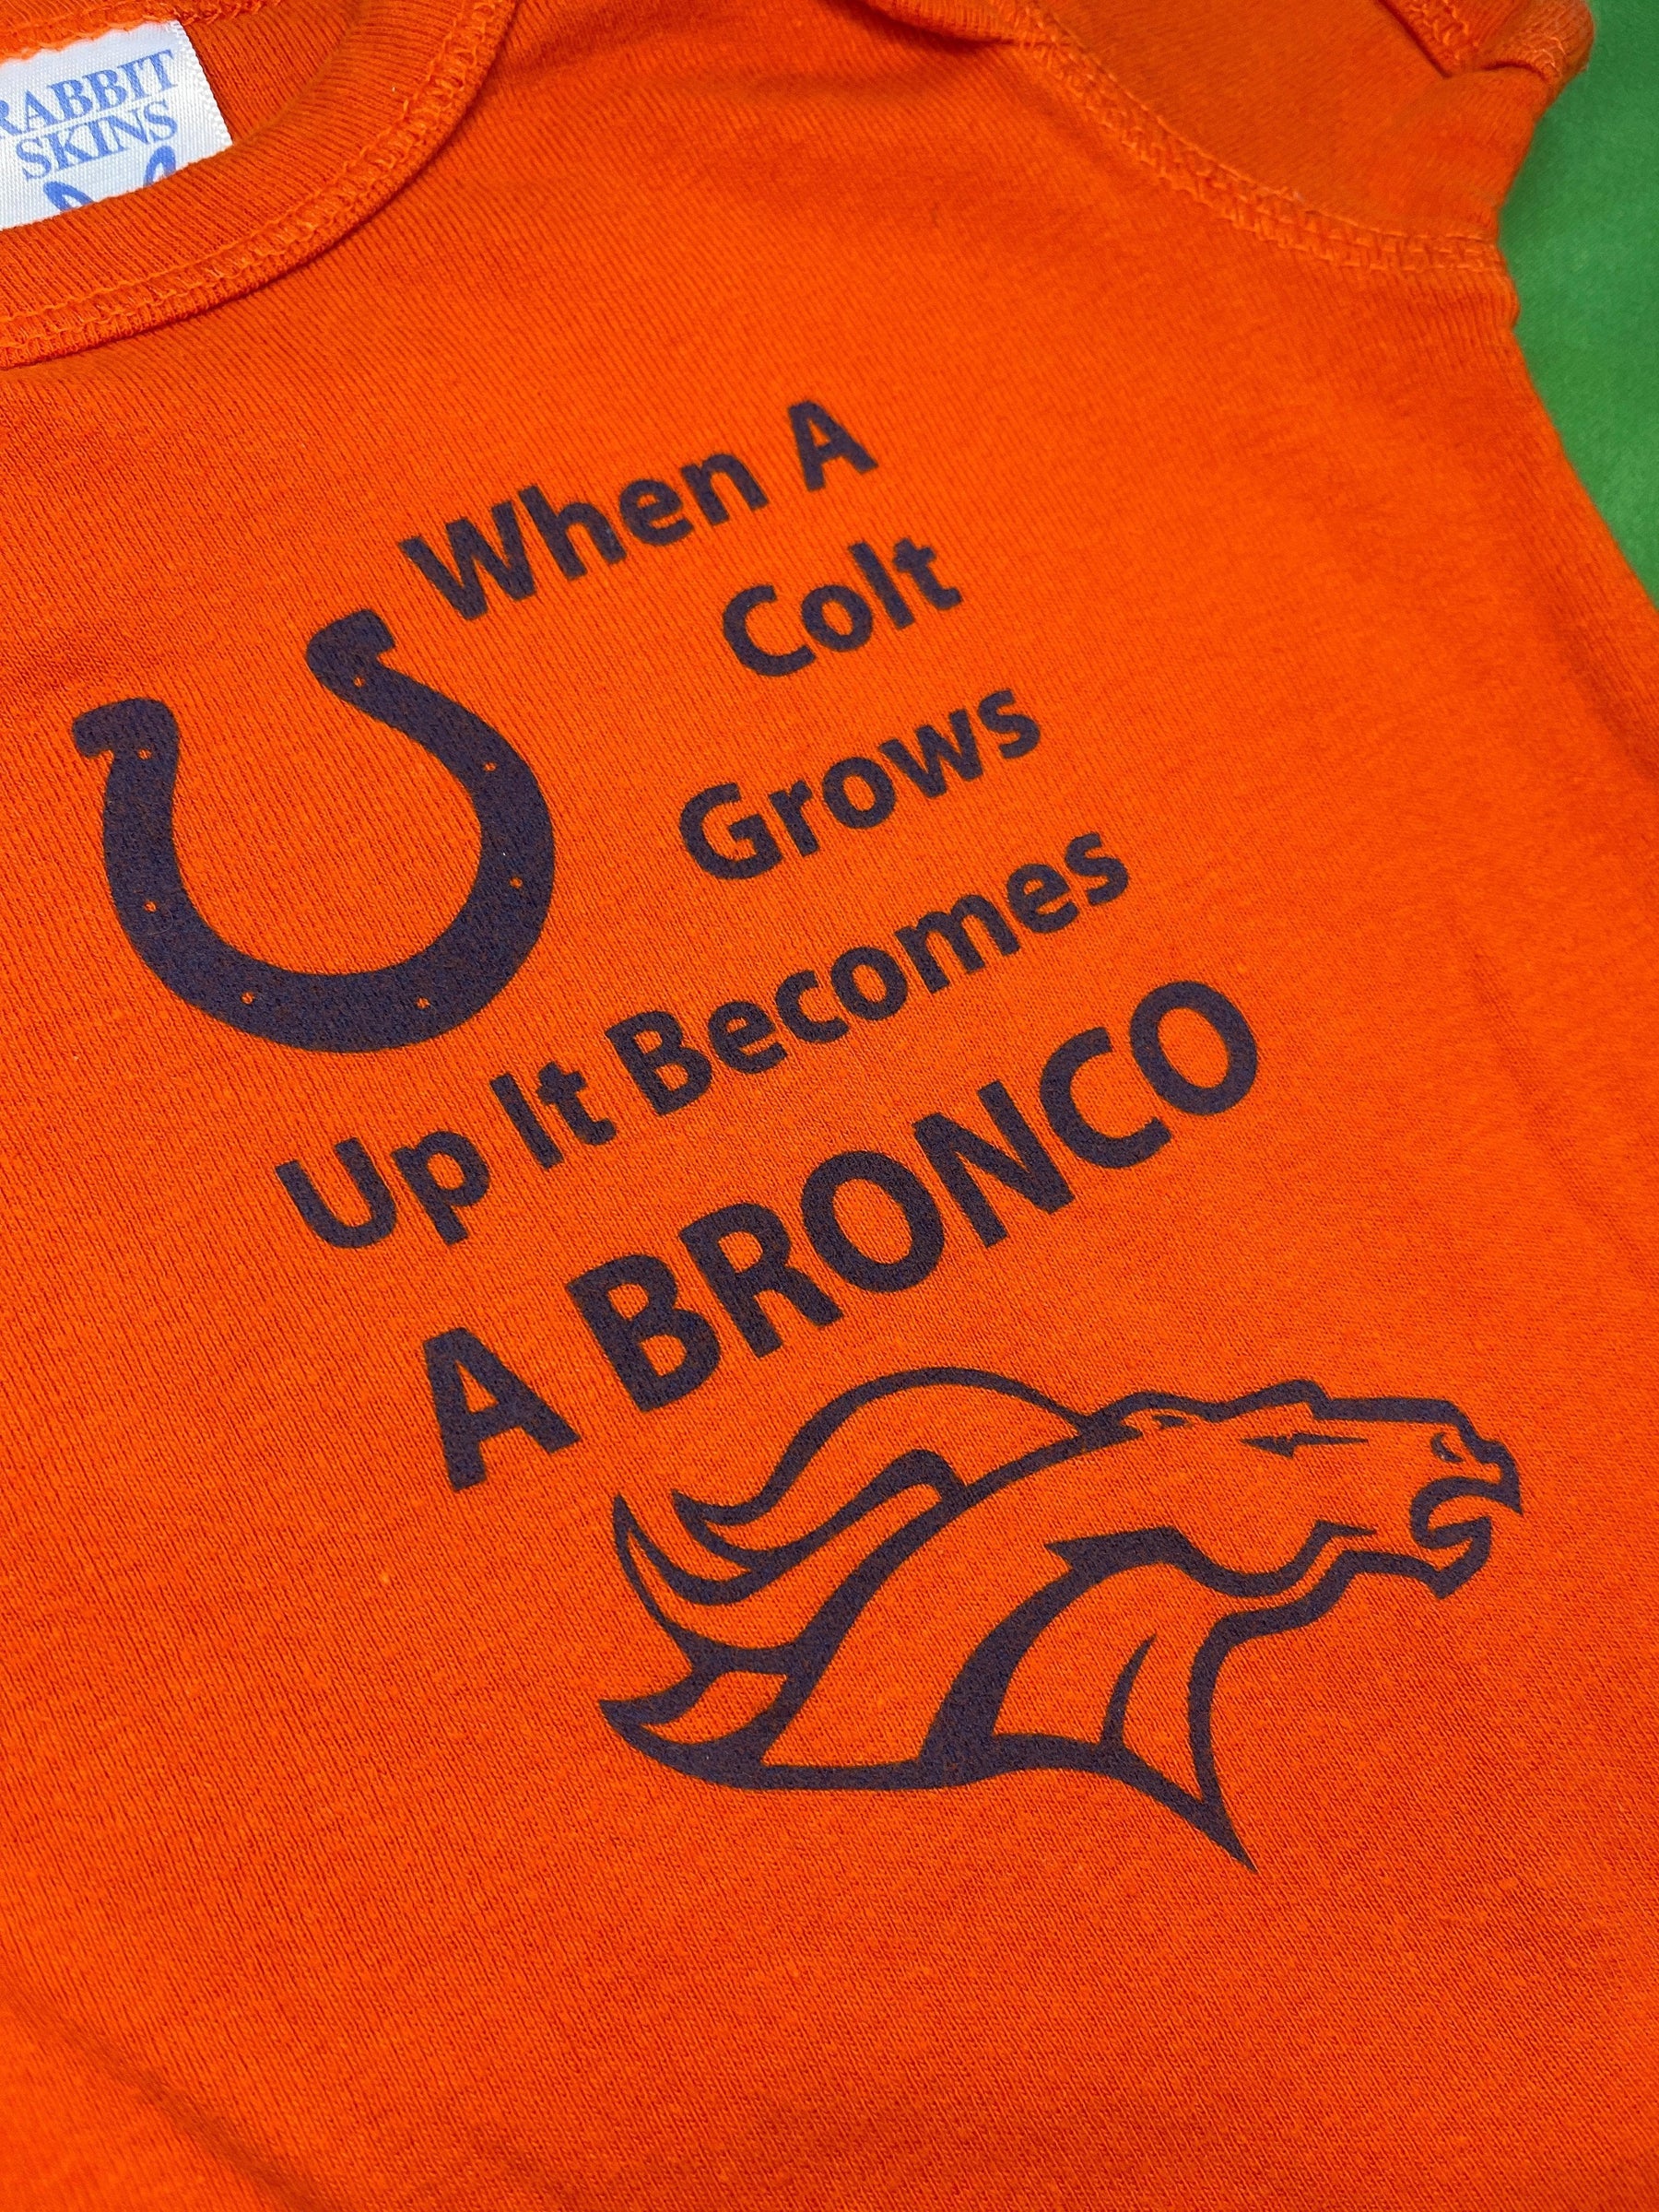 NFL Denver Broncos "When a Colt Grows Up" Bodysuit 6 months